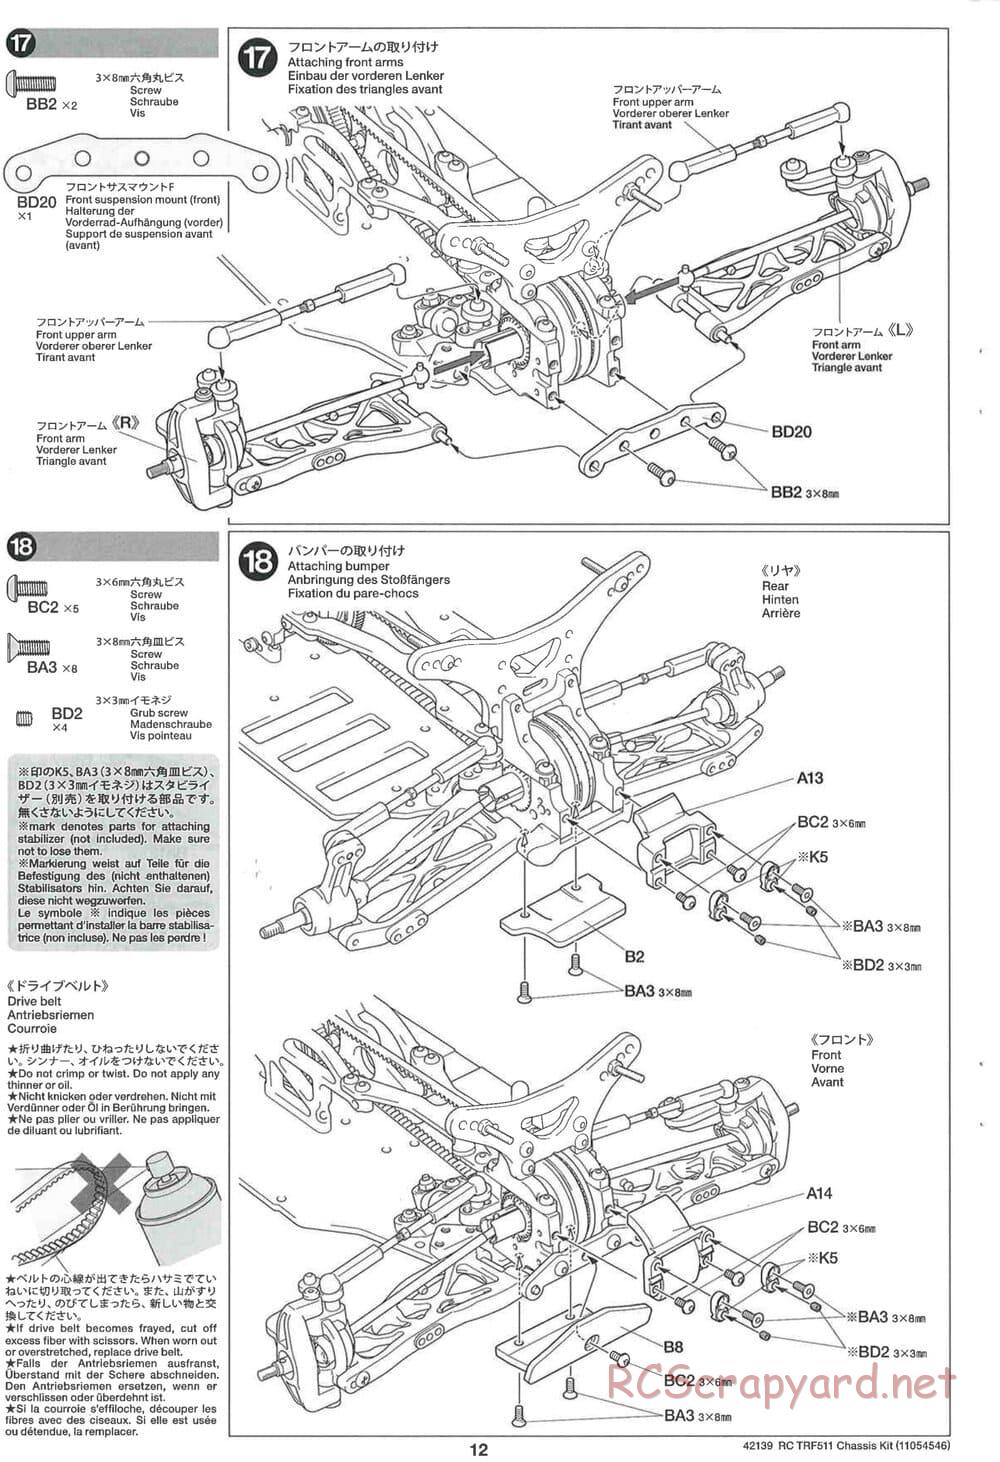 Tamiya - TRF511 Chassis - Manual - Page 12